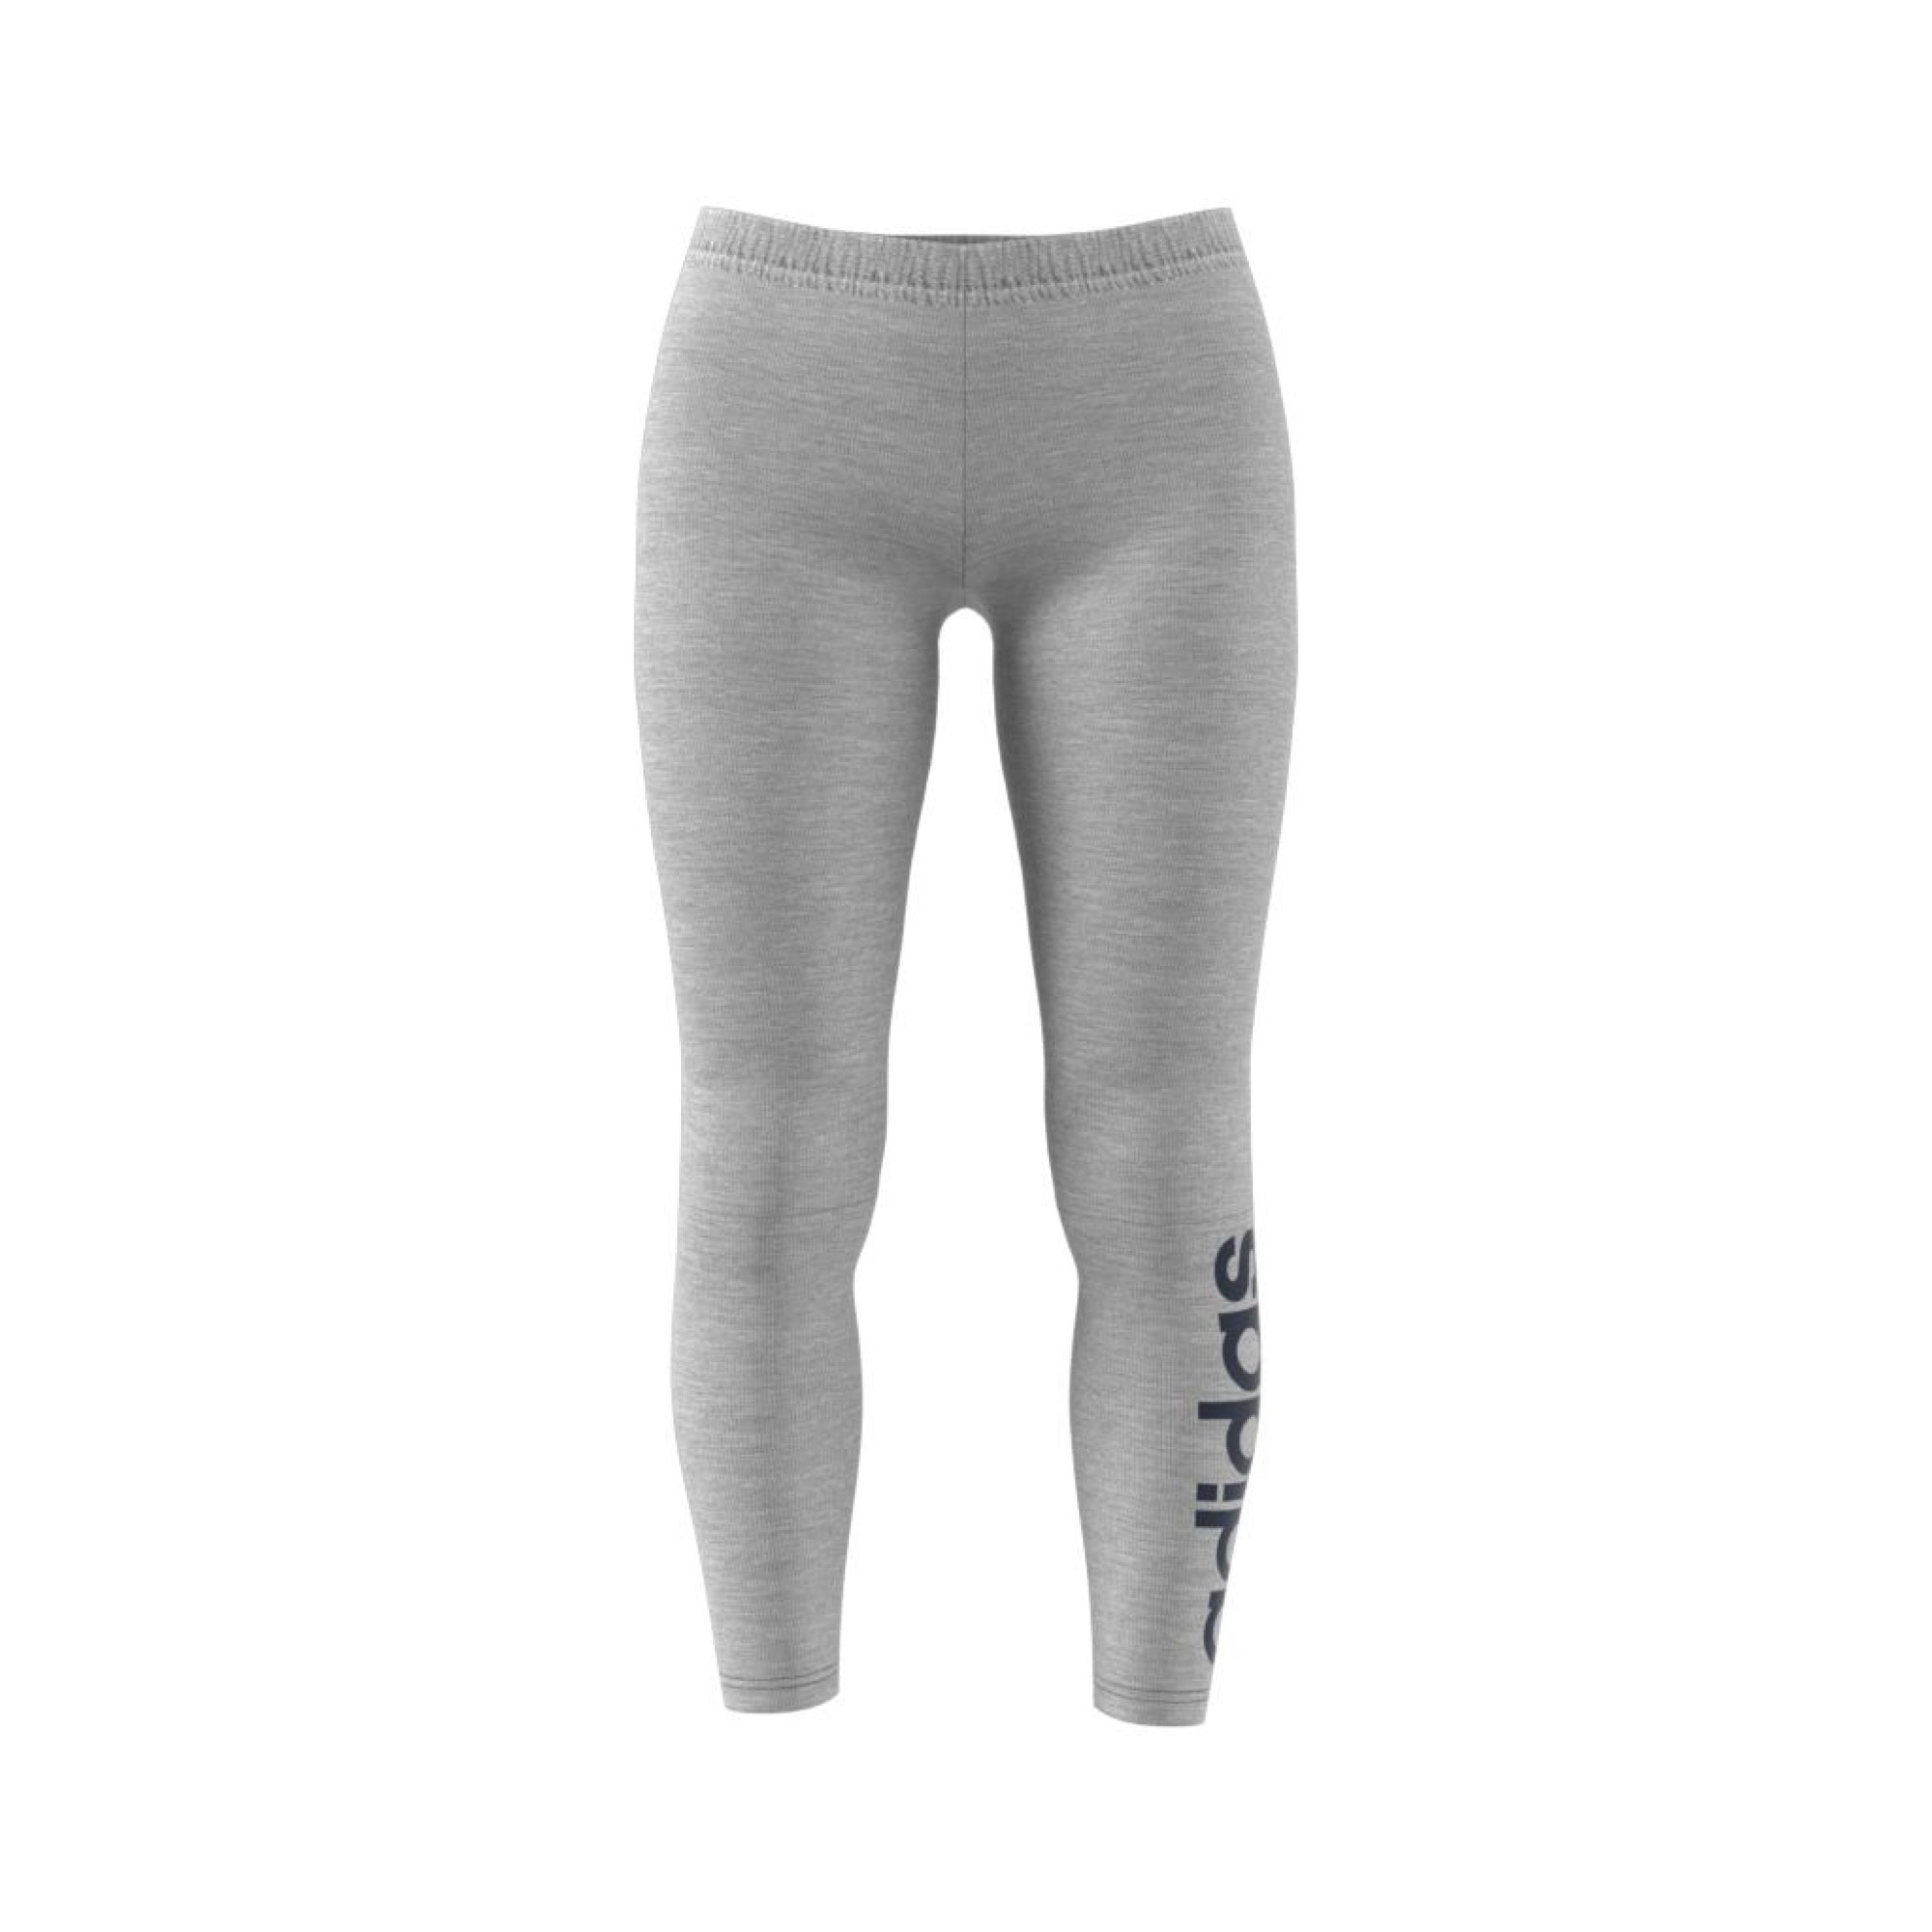 ADIDAS leggings donna grigio/blu b45777 - Acquista online su Sportland